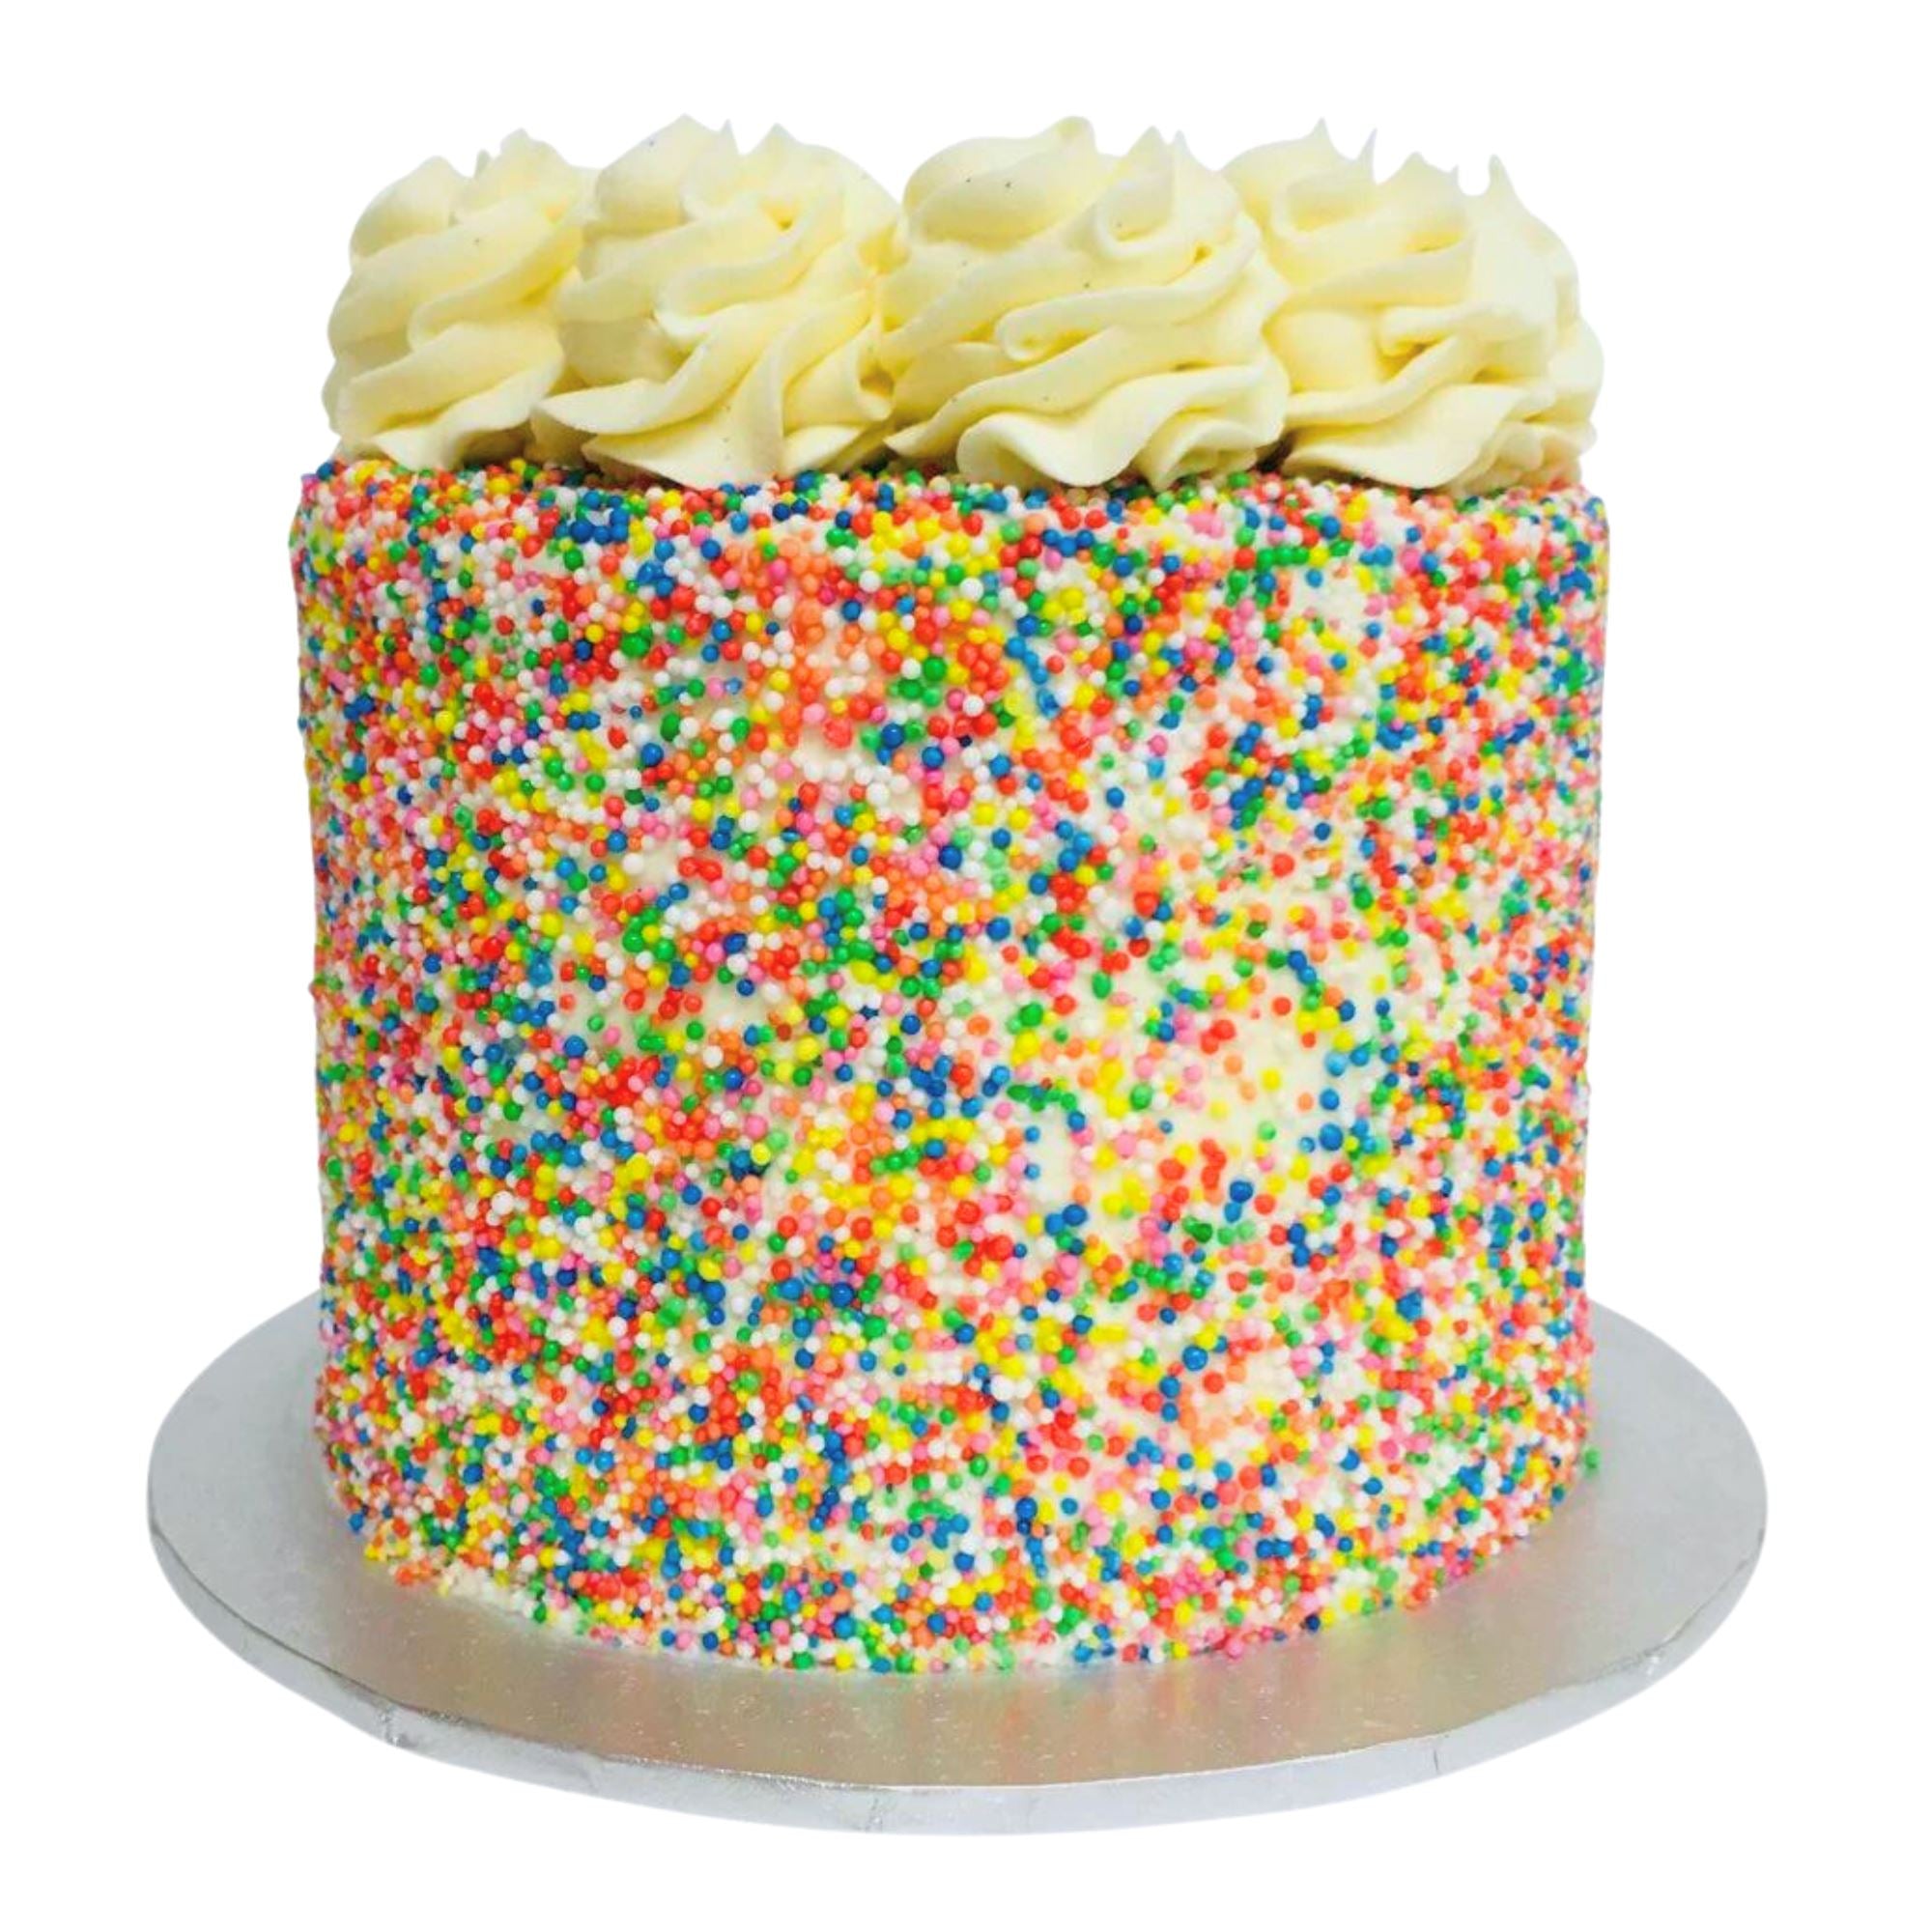 Rainbow Cake - The Cupcake Queens 